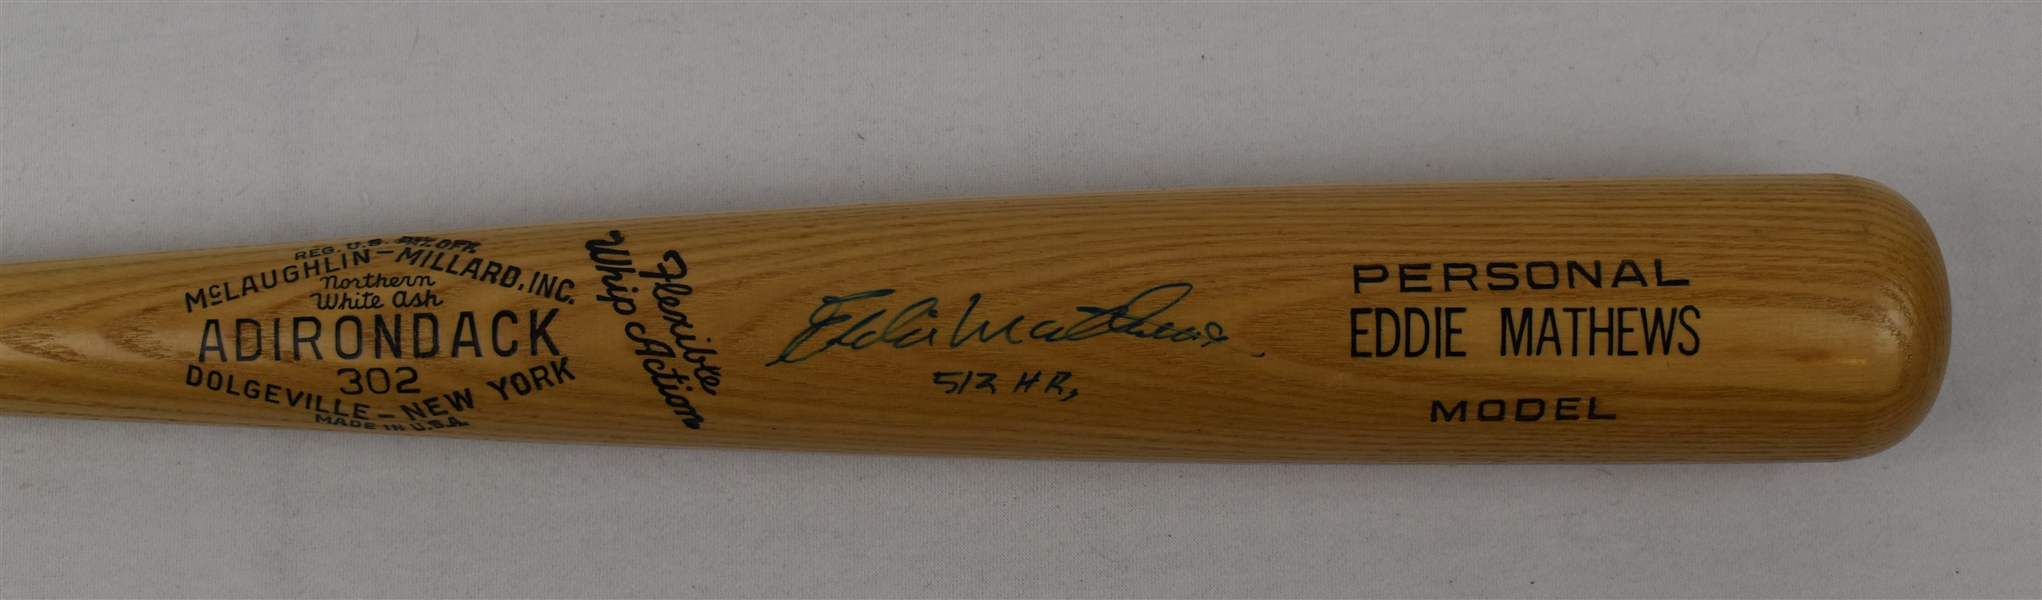 Eddie Mathews Autographed Bat